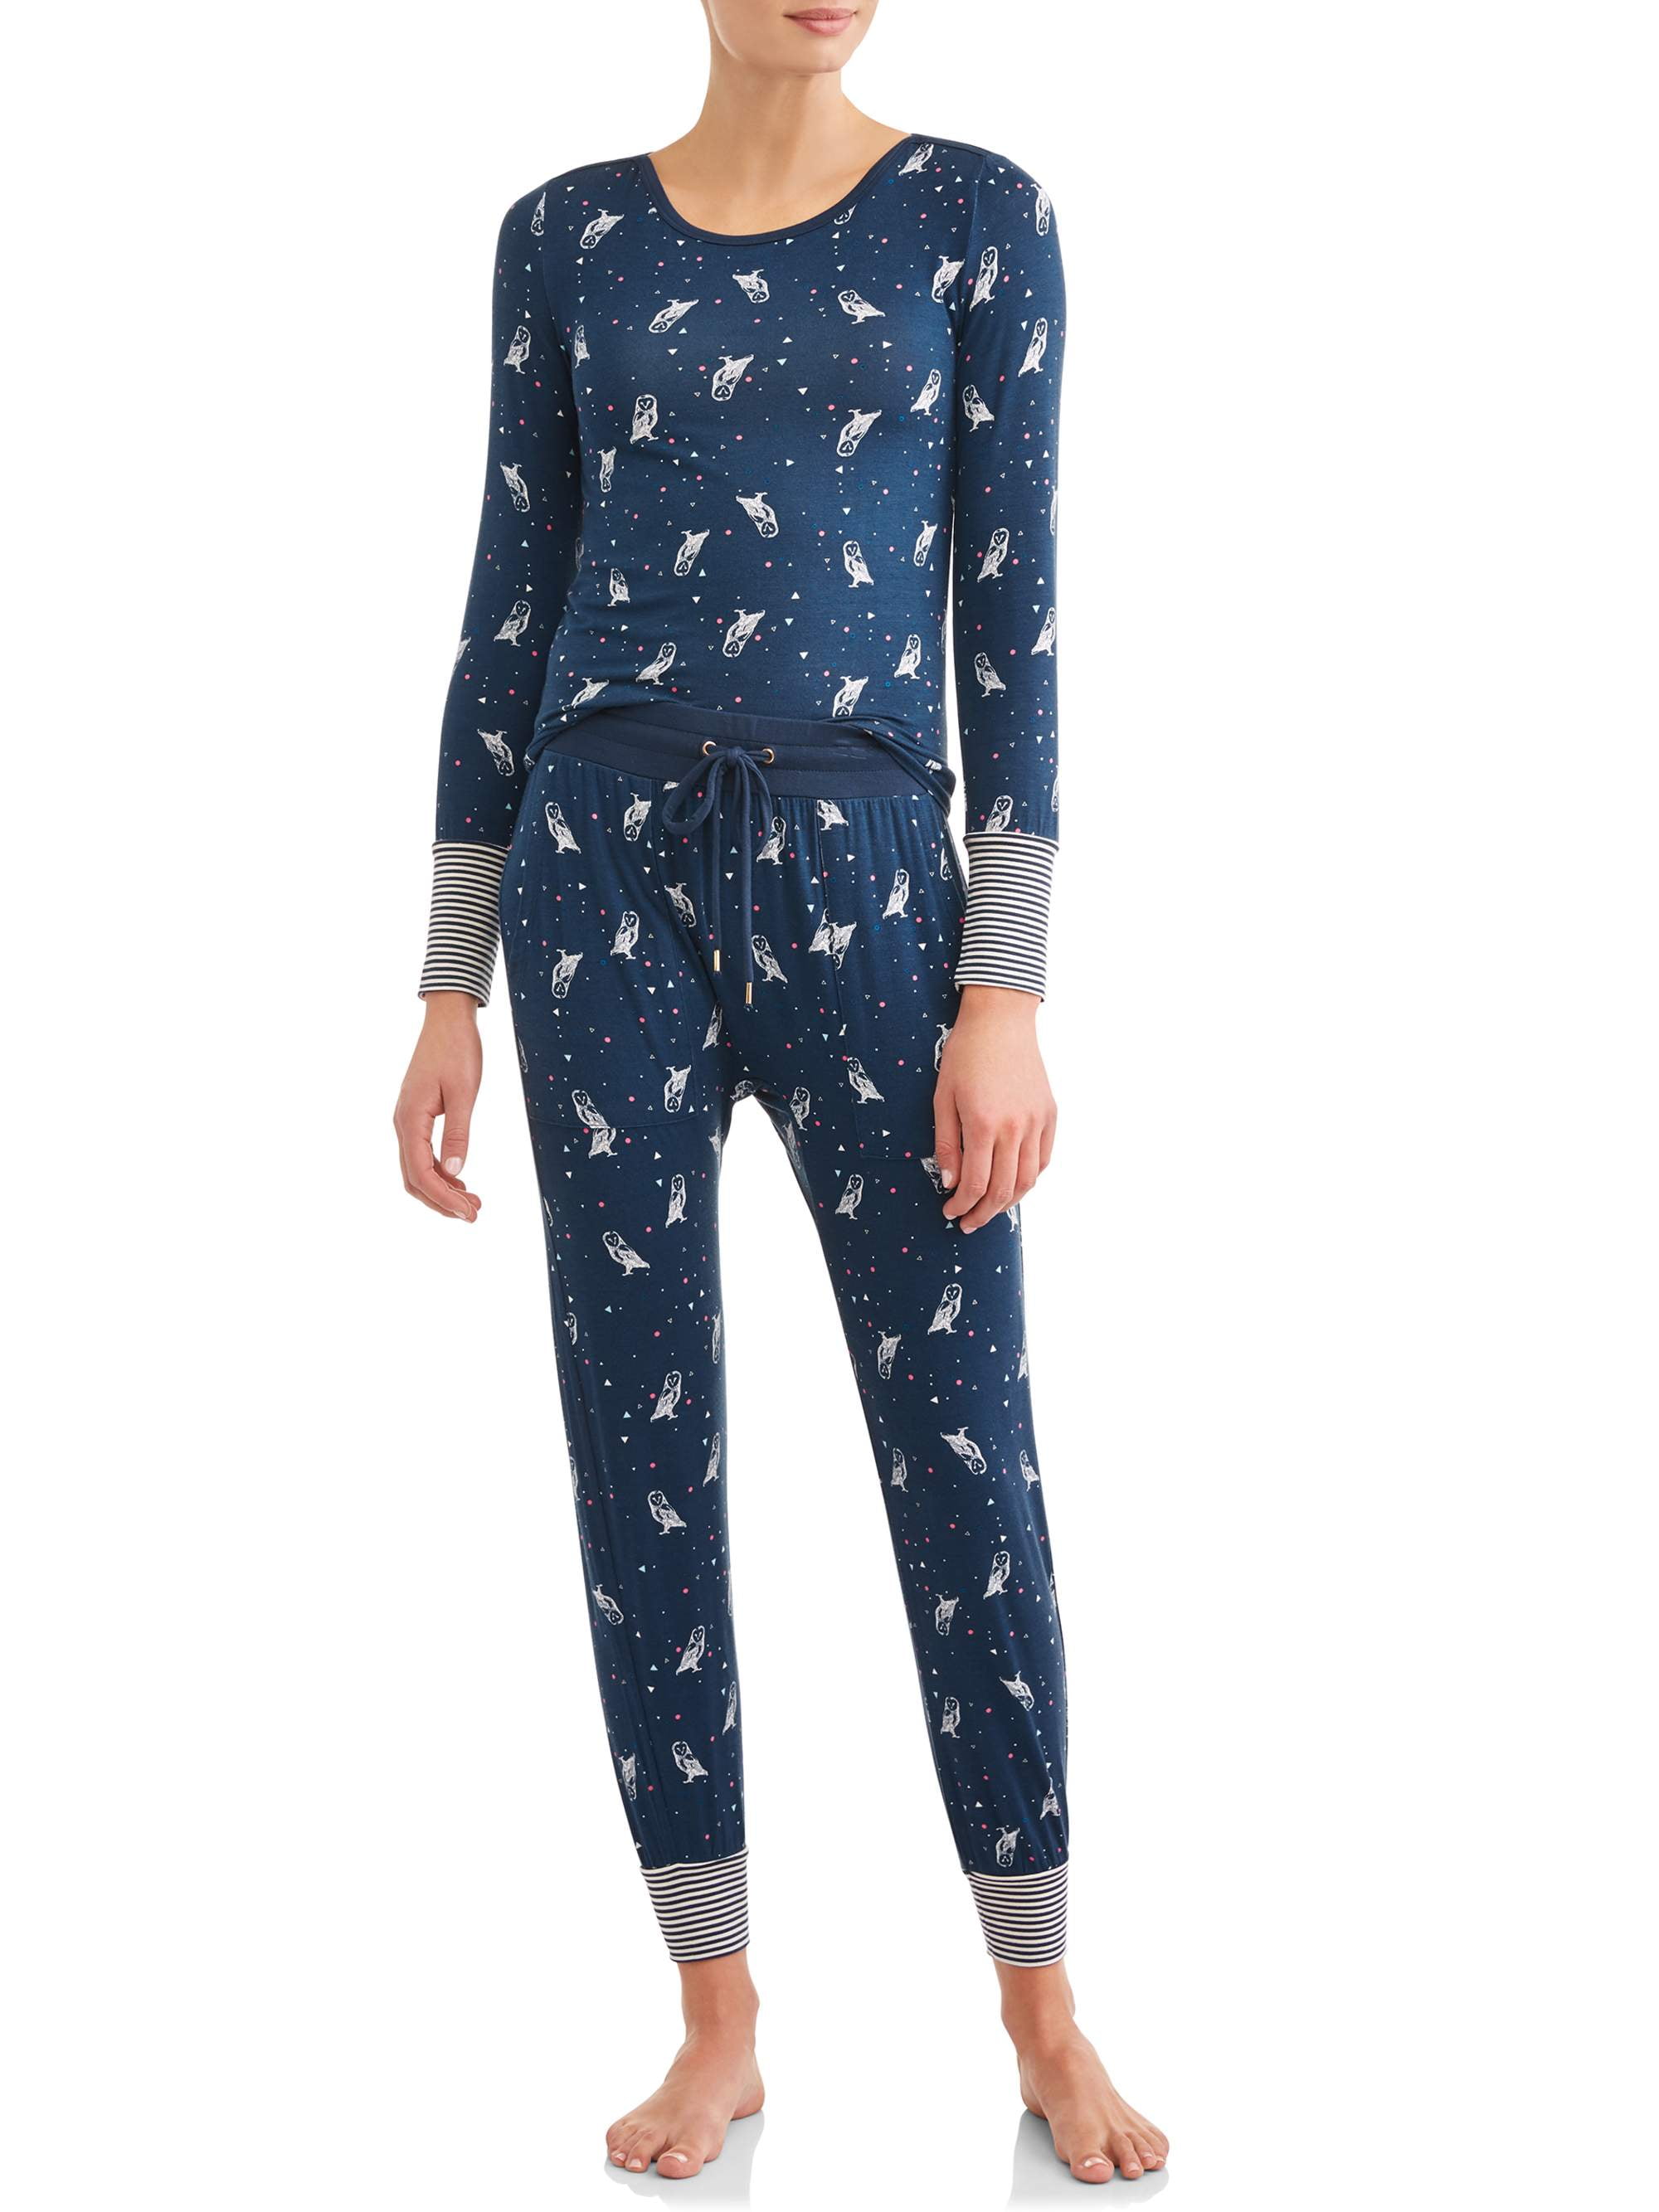 HONEYDEW - Women's Campfire Cutie Jersey Pajama Set - Walmart.com ...